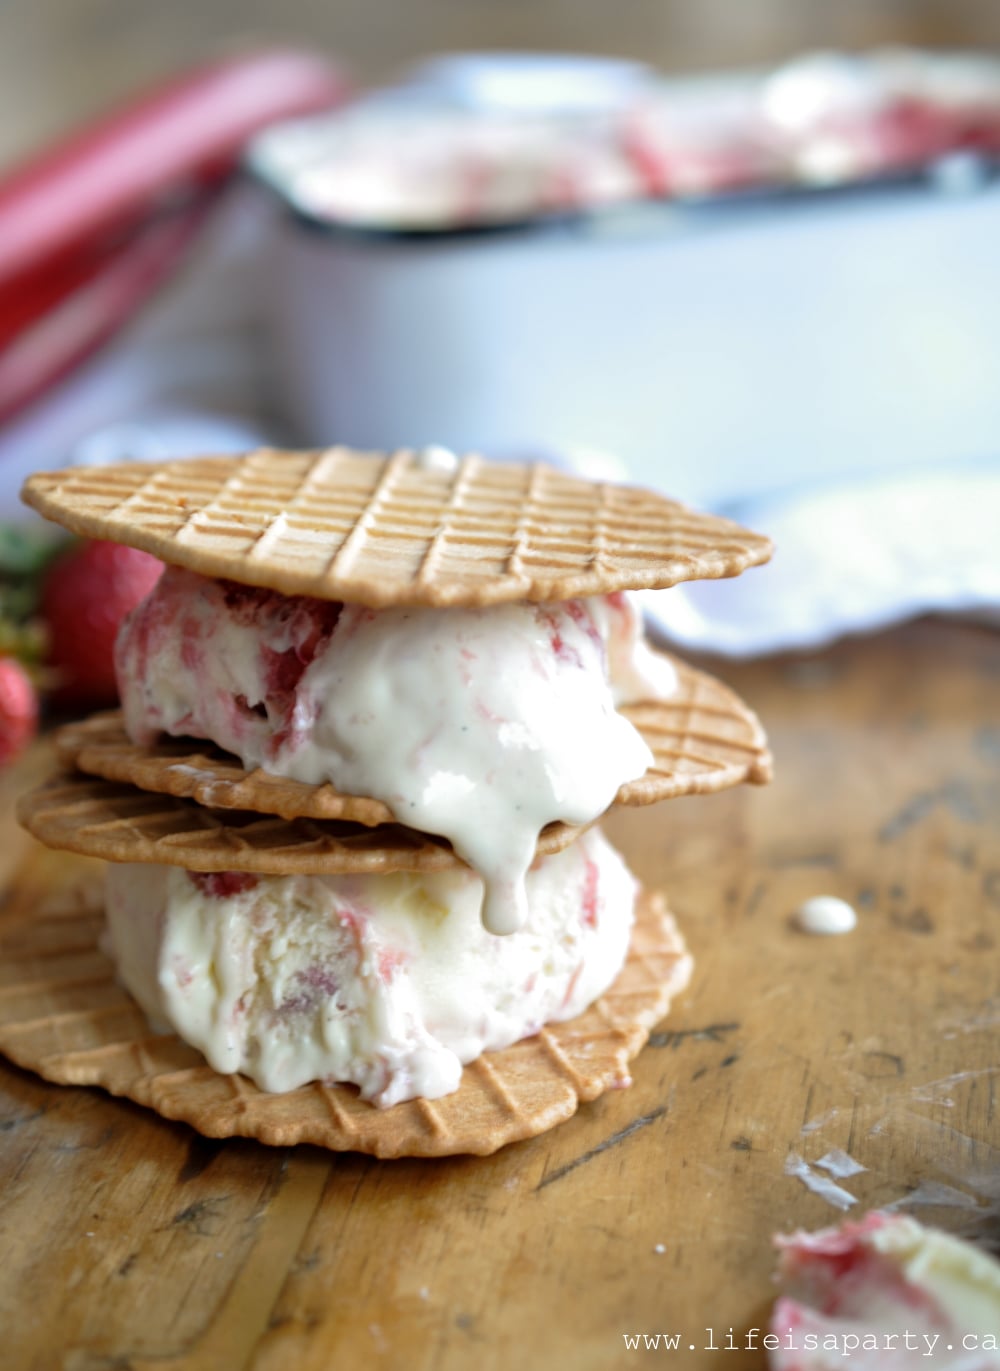 Strawberry and Rhubarb Ice Cream Recipe